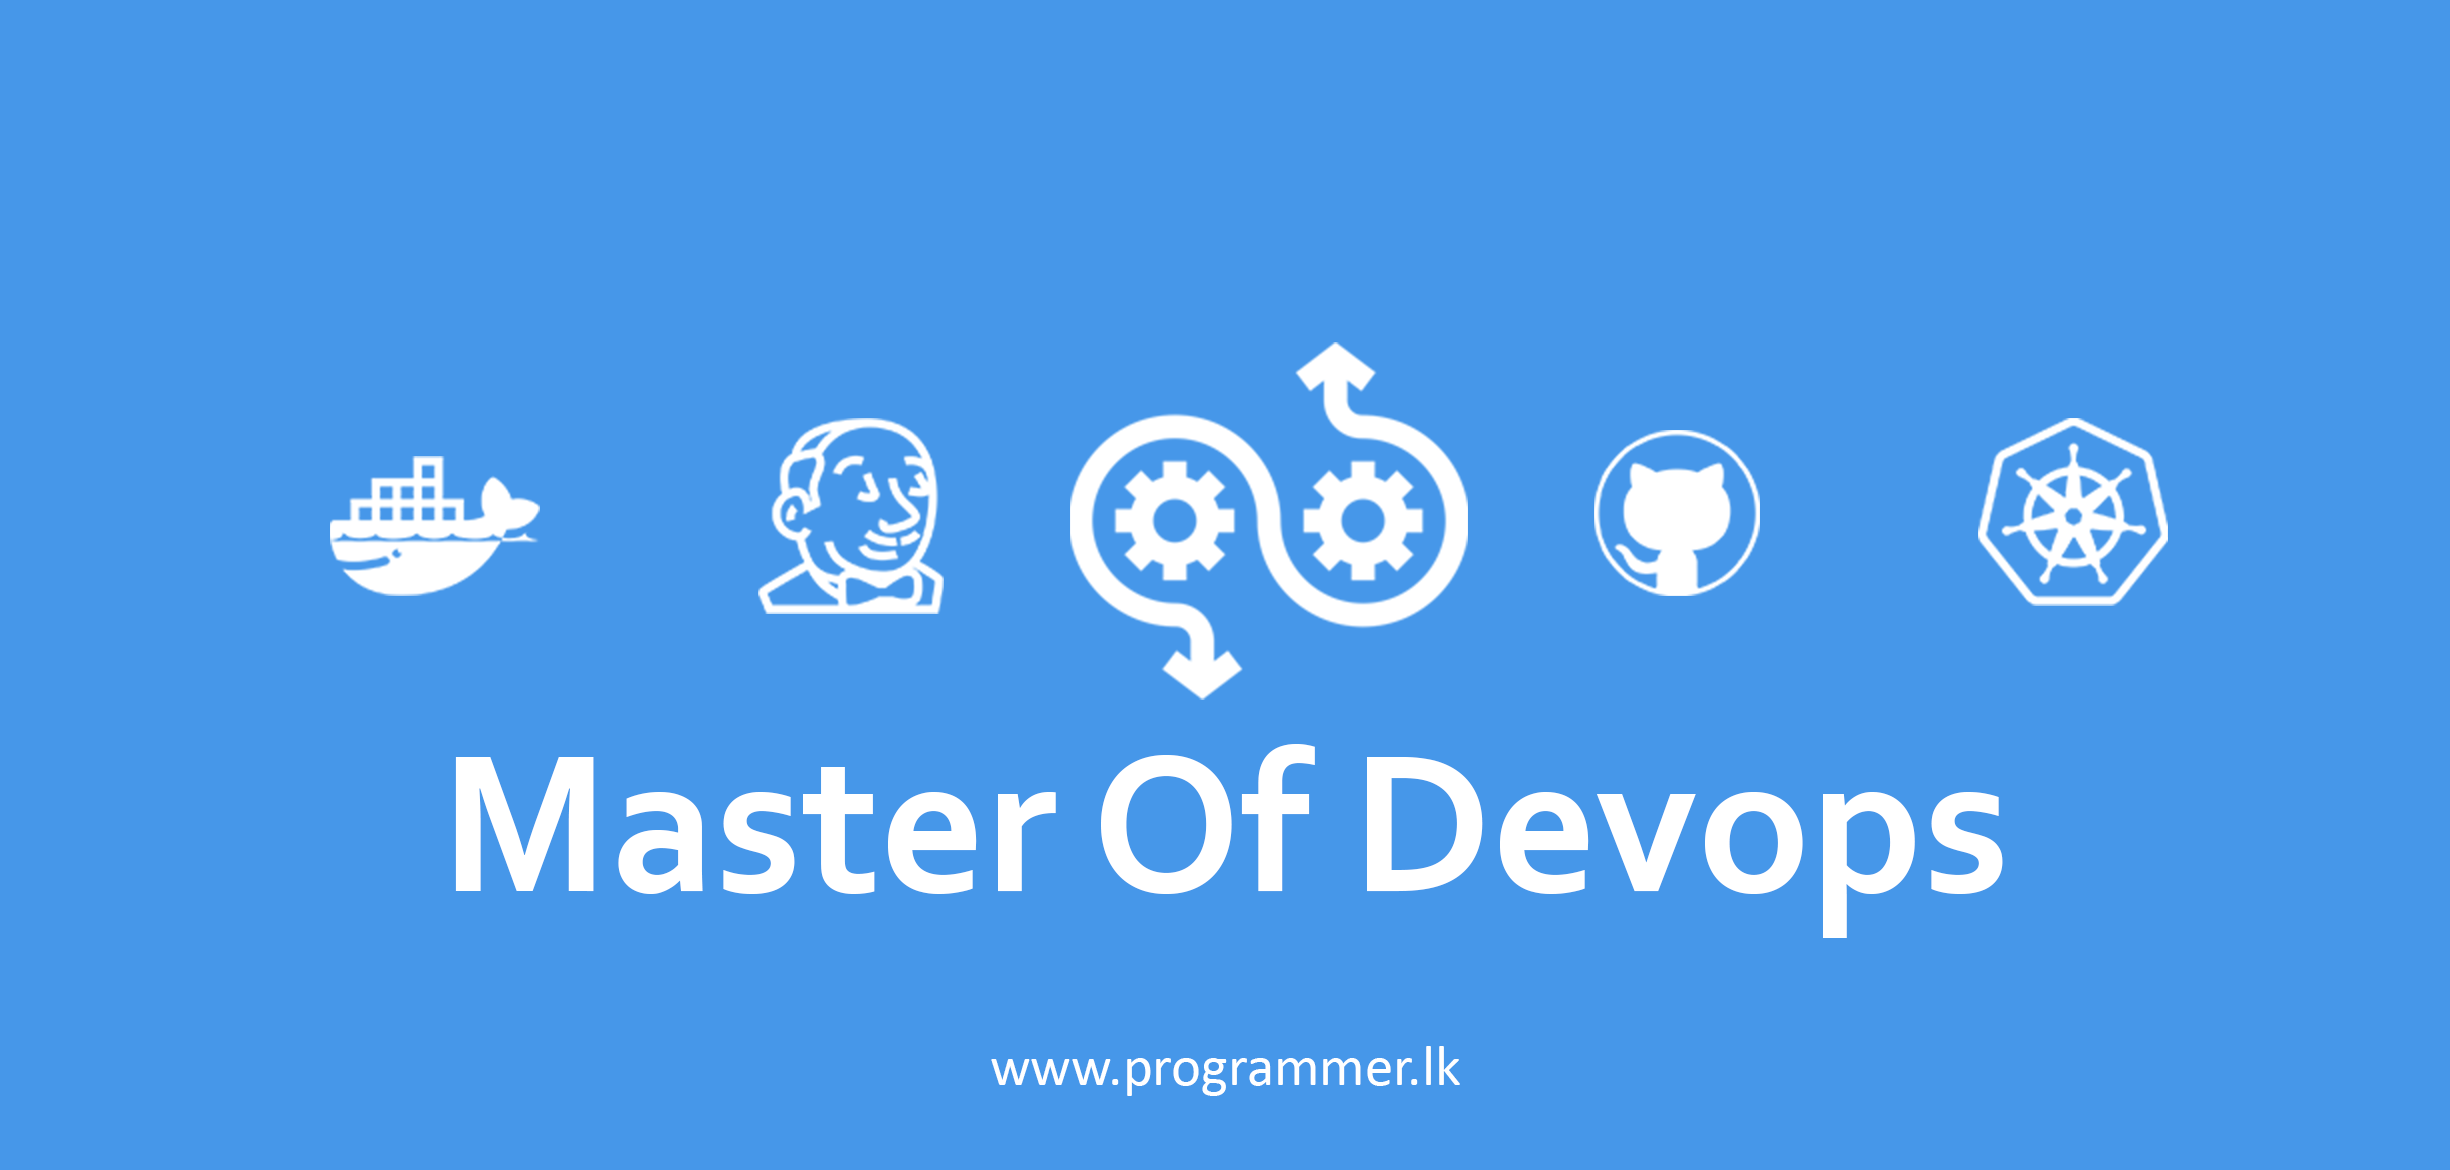 Master Of Devops course in sri lanka by programmer.lk